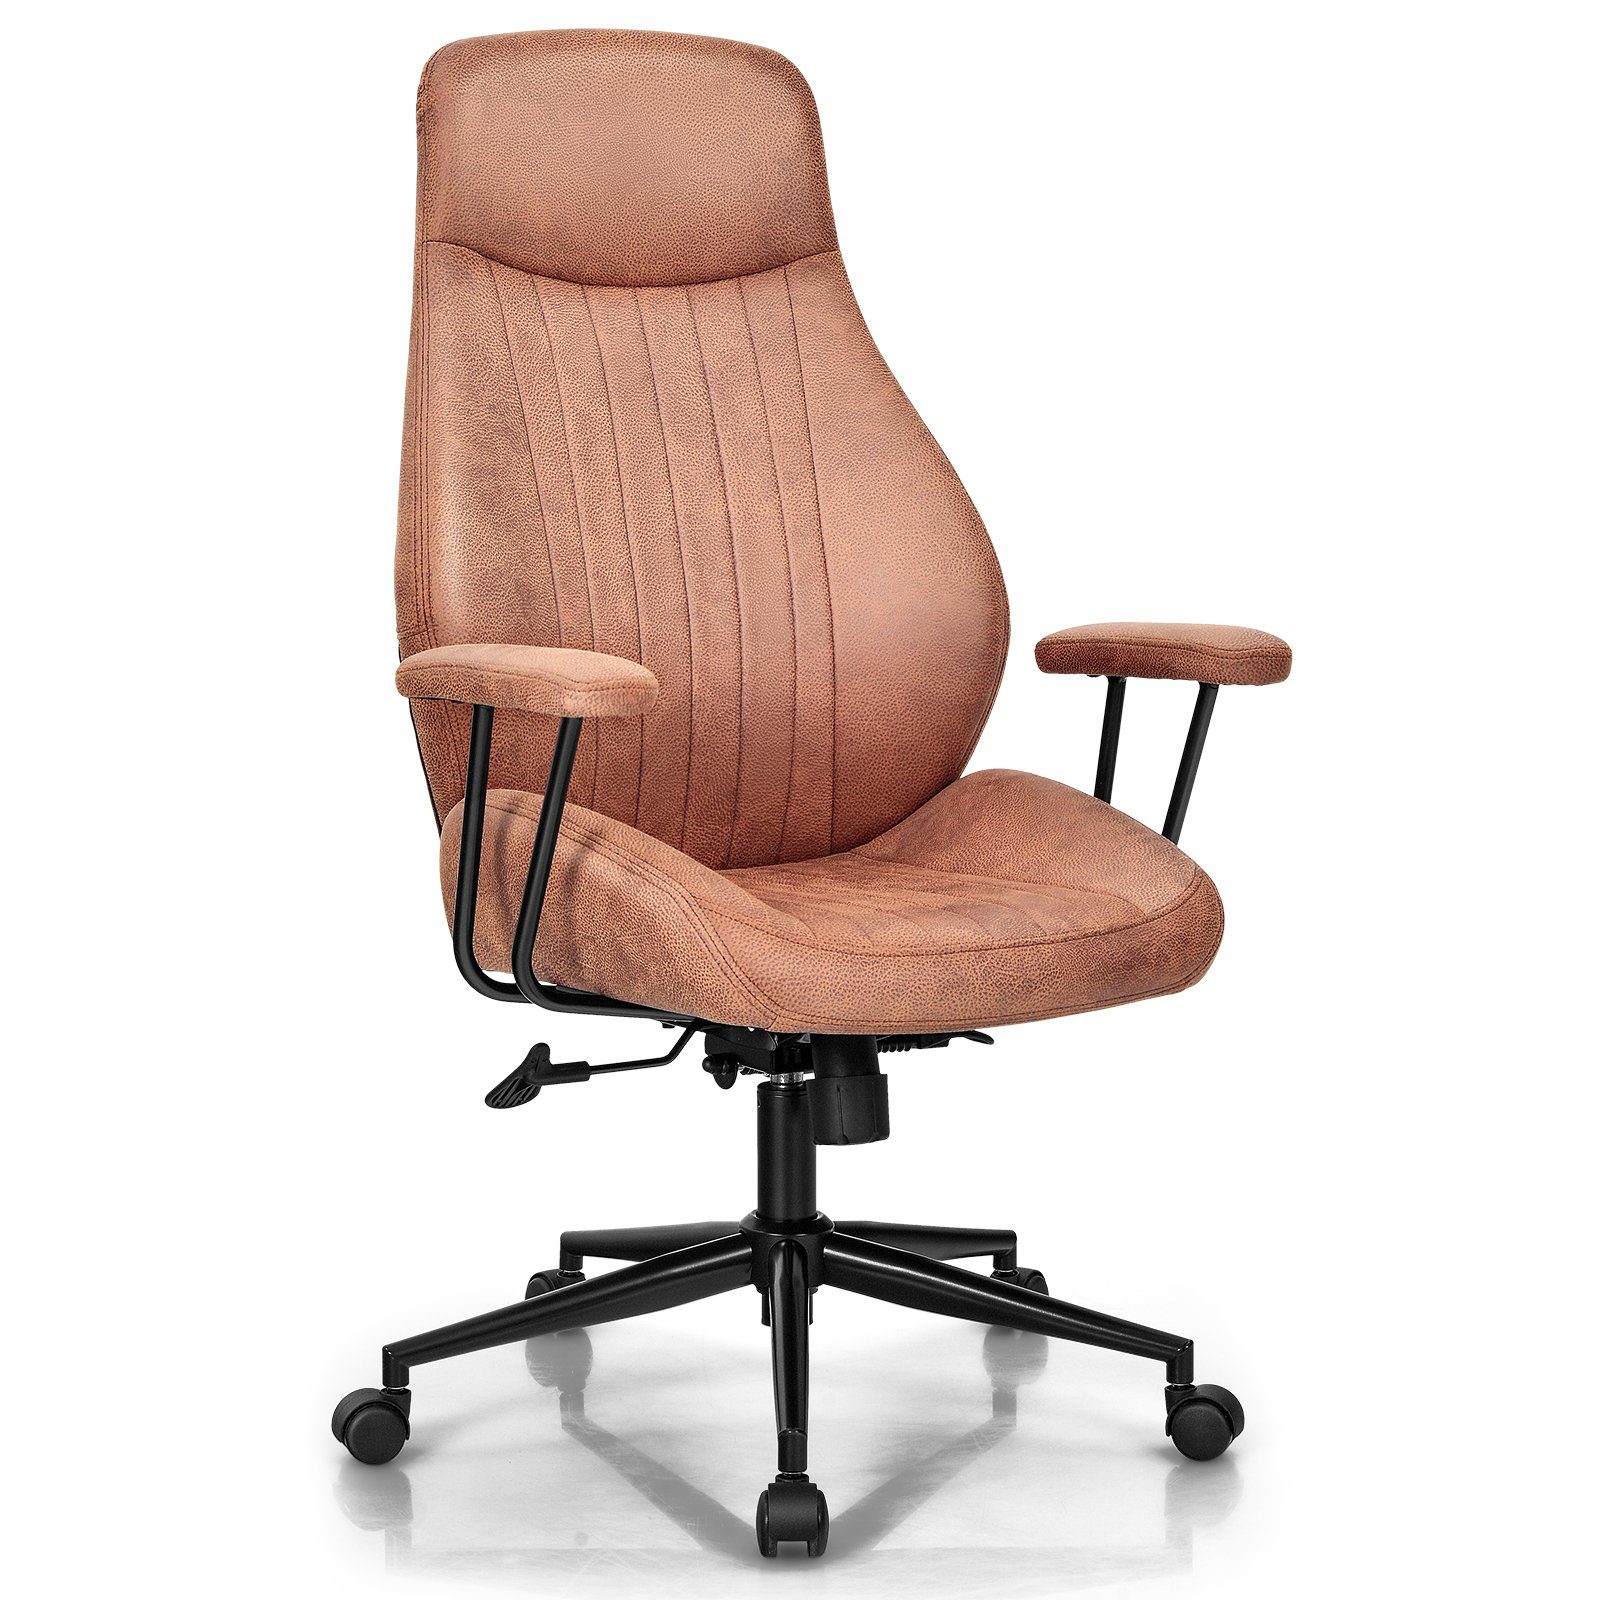 Durrafy ergonomic adjustable chair : r/OfficeChairs